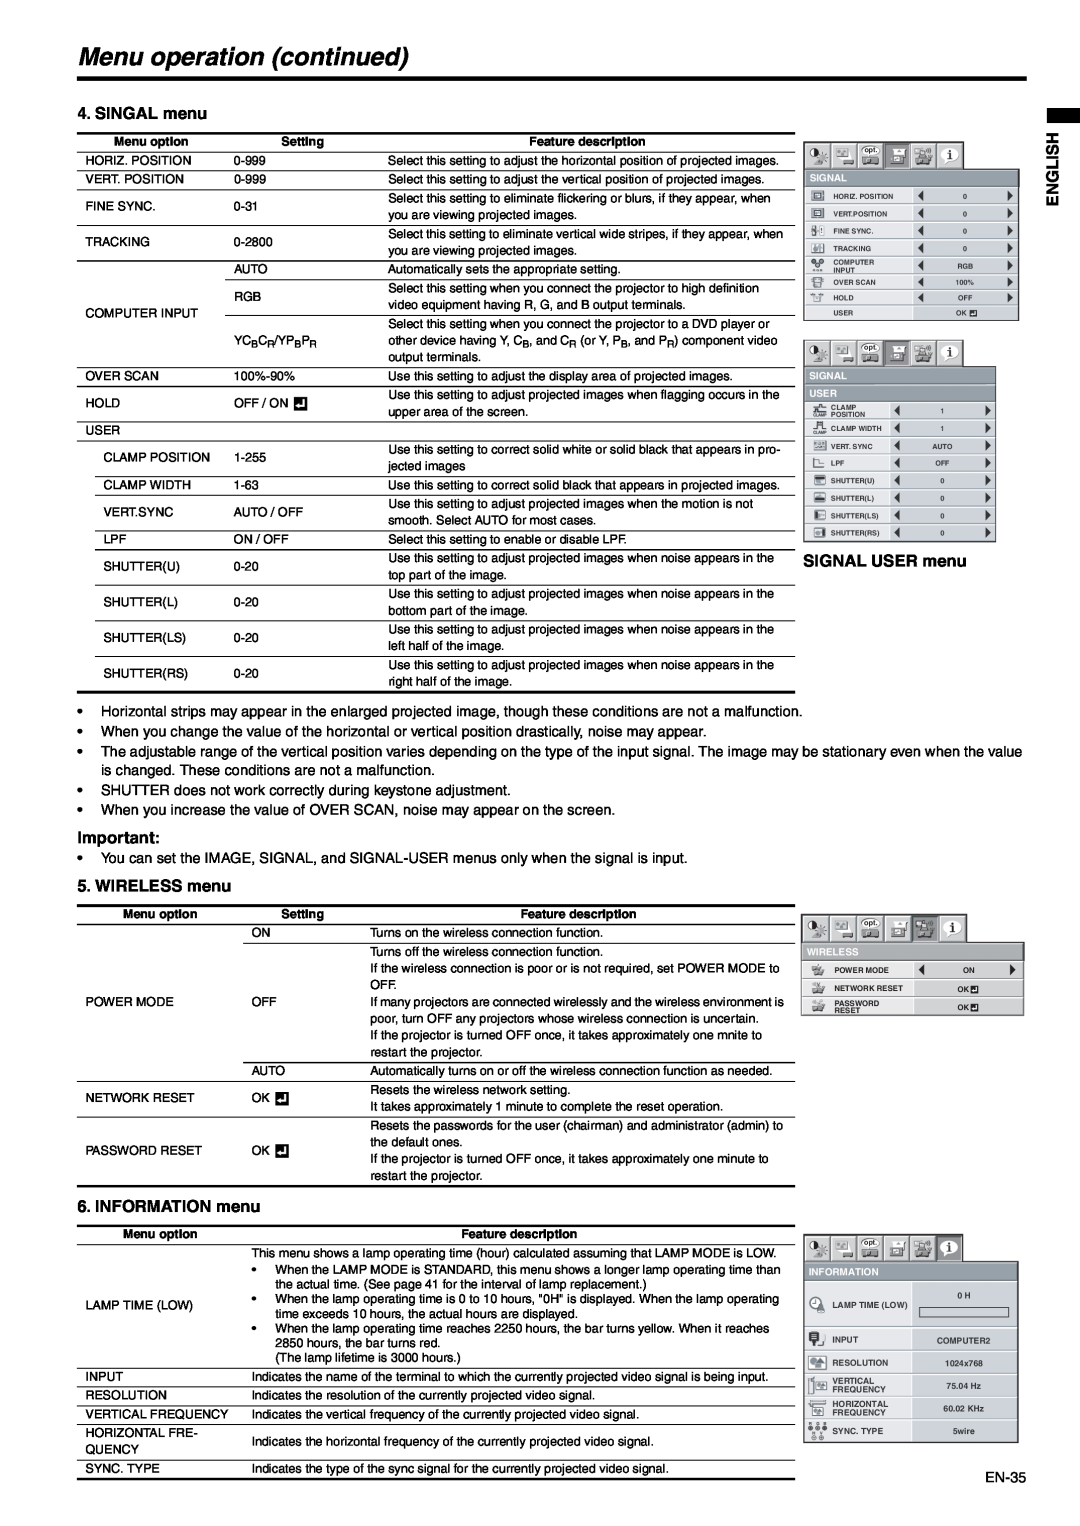 Mitsubishi Electronics EX53E SINGAL menu, SIGNAL USER menu, WIRELESS menu, INFORMATION menu, Menu operation continued 